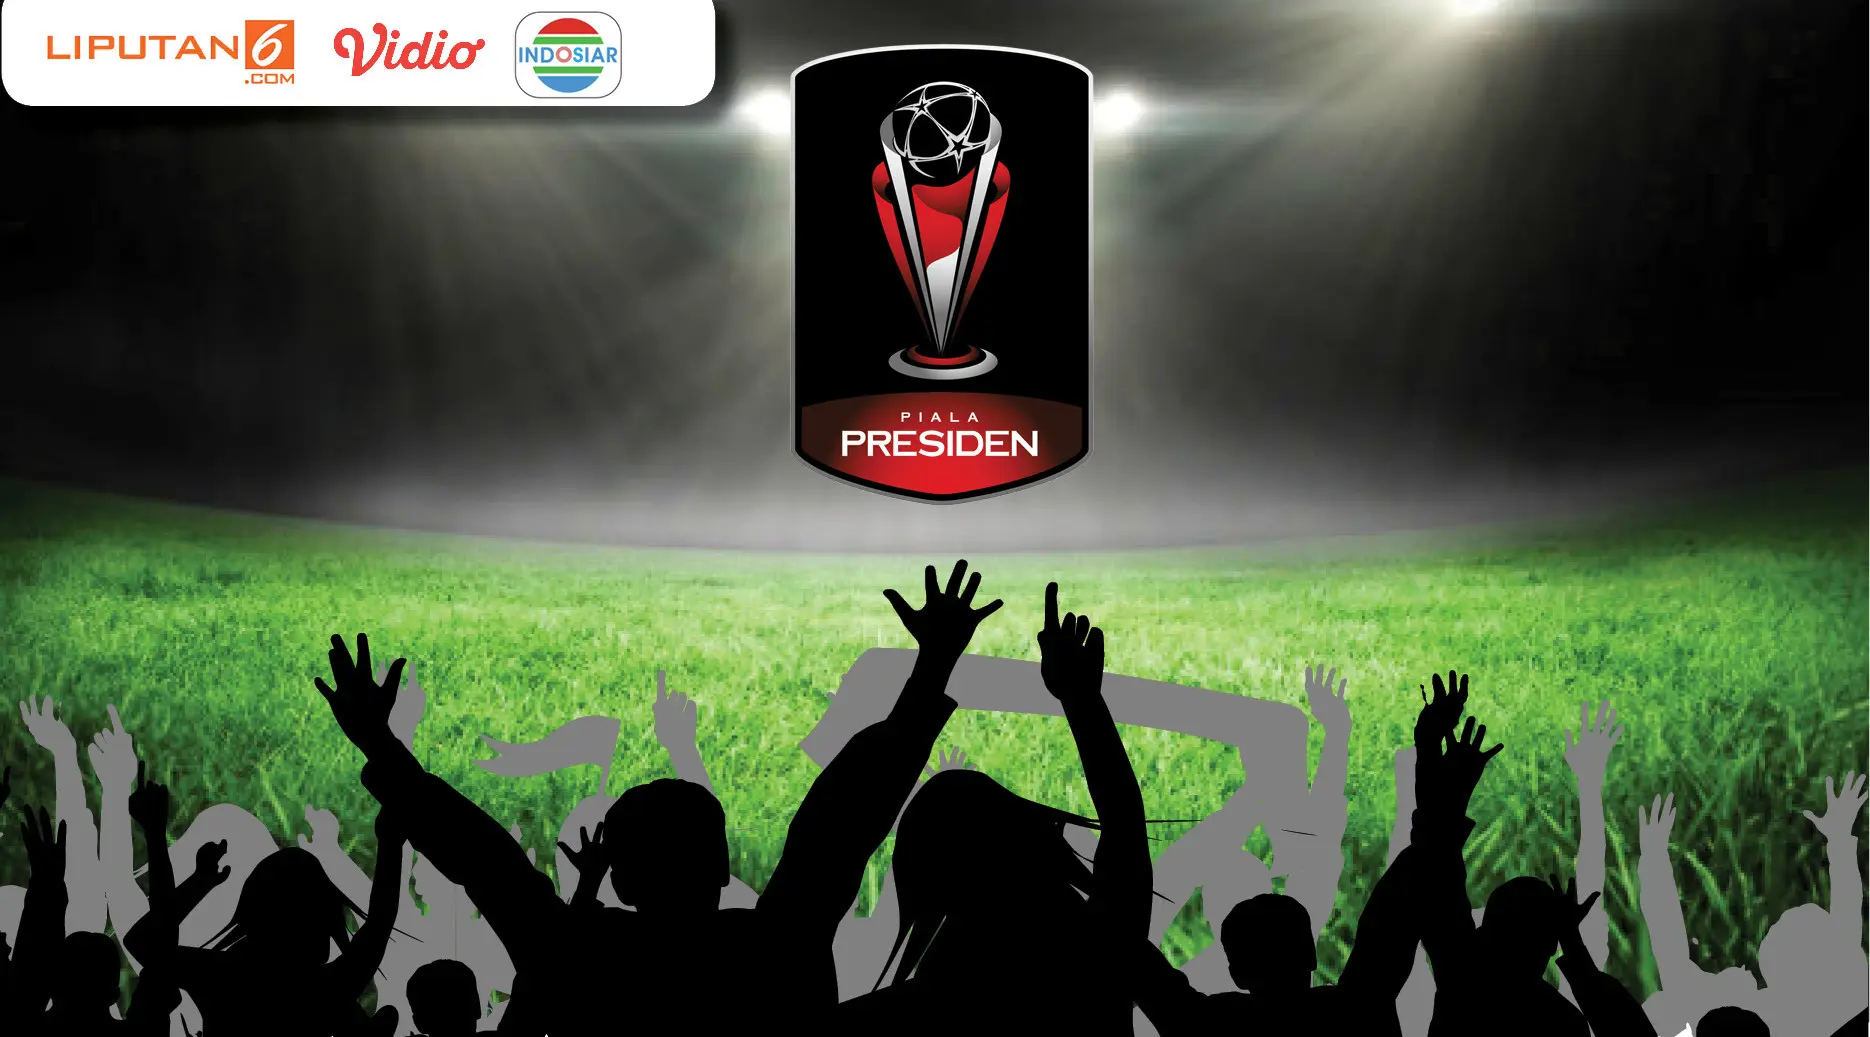 Banner Piala Presiden 2018 (Liputan6.com / Trie yas)